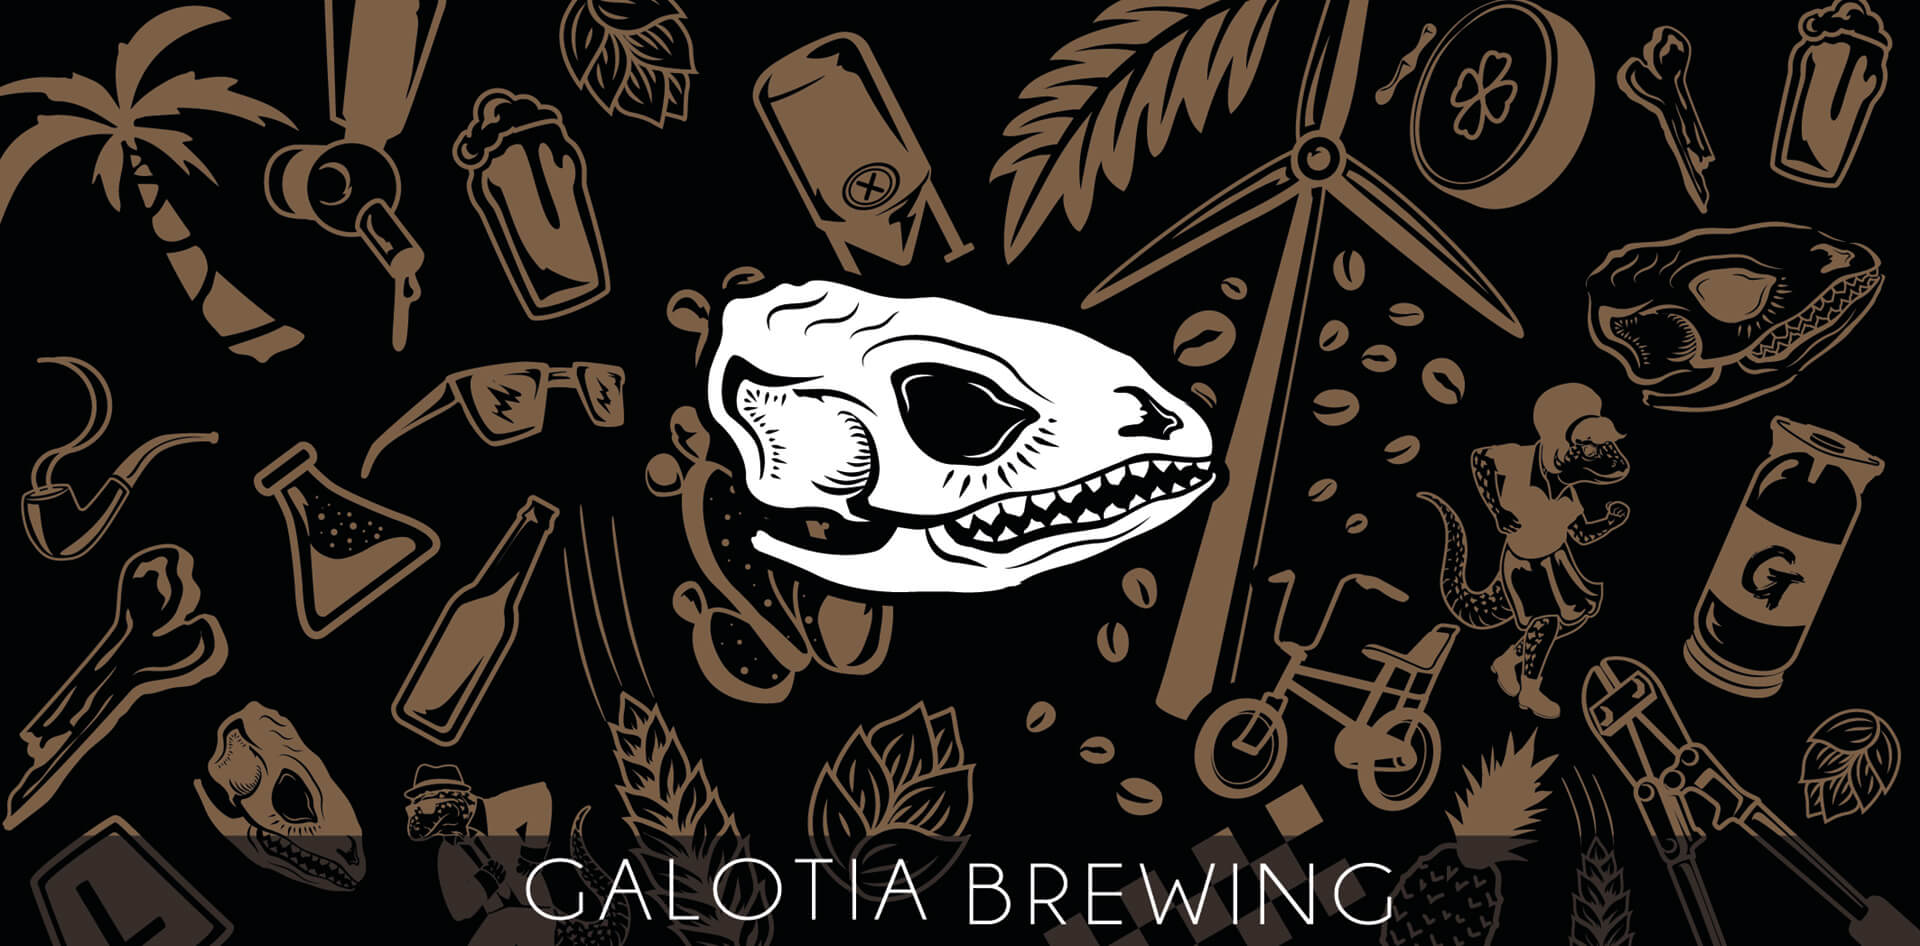 Galotia brewing label design 1